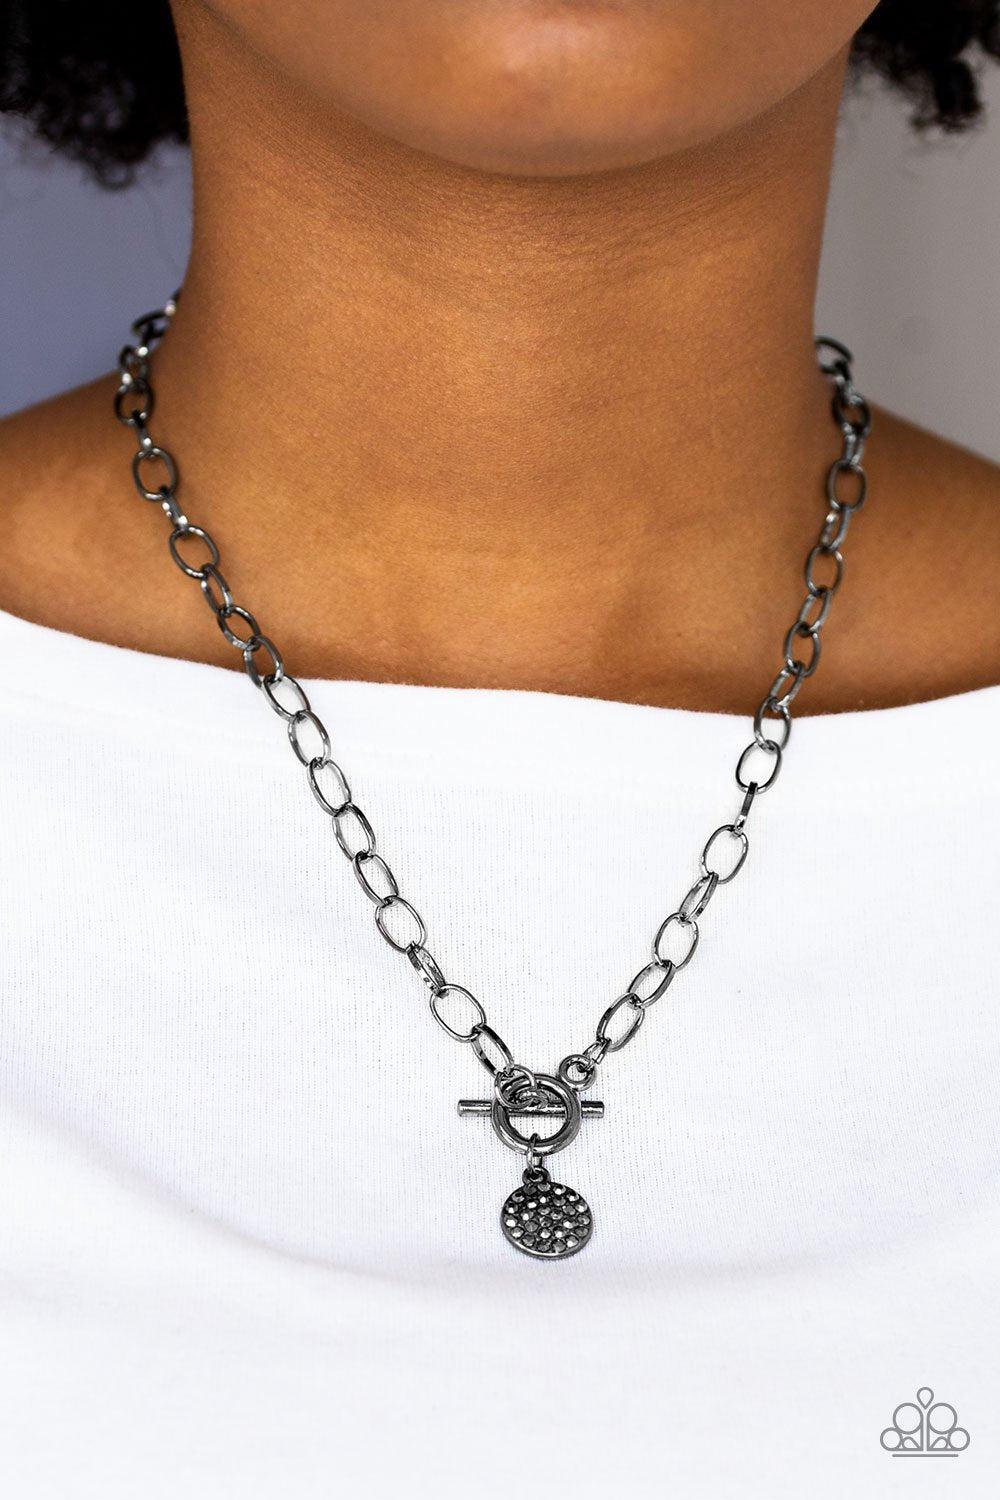 Sorority Sisters Gunmetal Black and Hematite Rhinestone Necklace - Paparazzi Accessories-CarasShop.com - $5 Jewelry by Cara Jewels